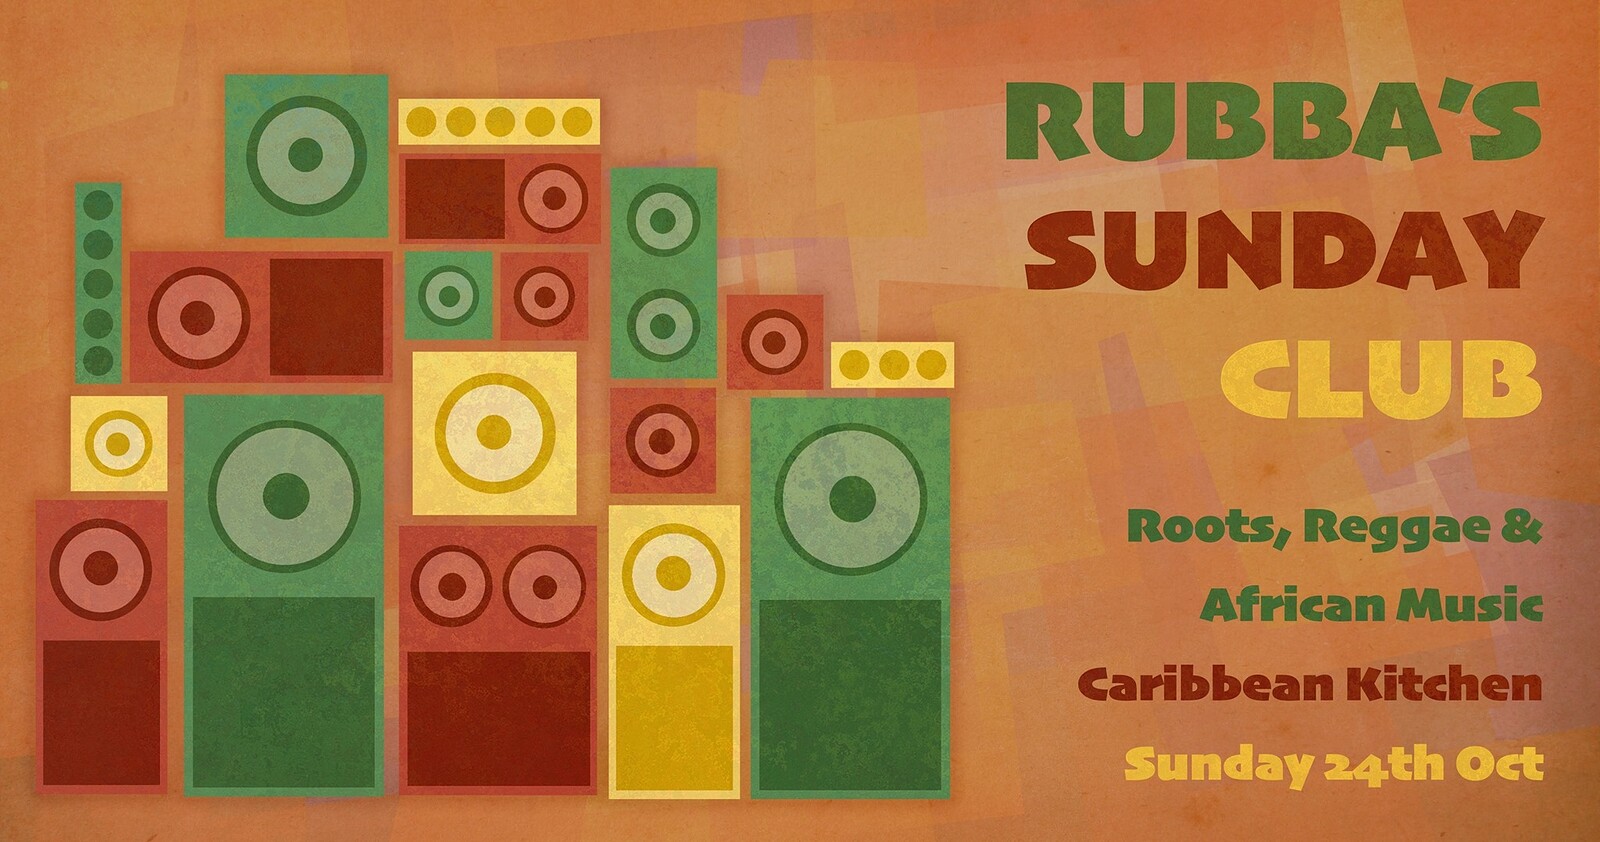 Rubba's Sunday Club at Jam Jar